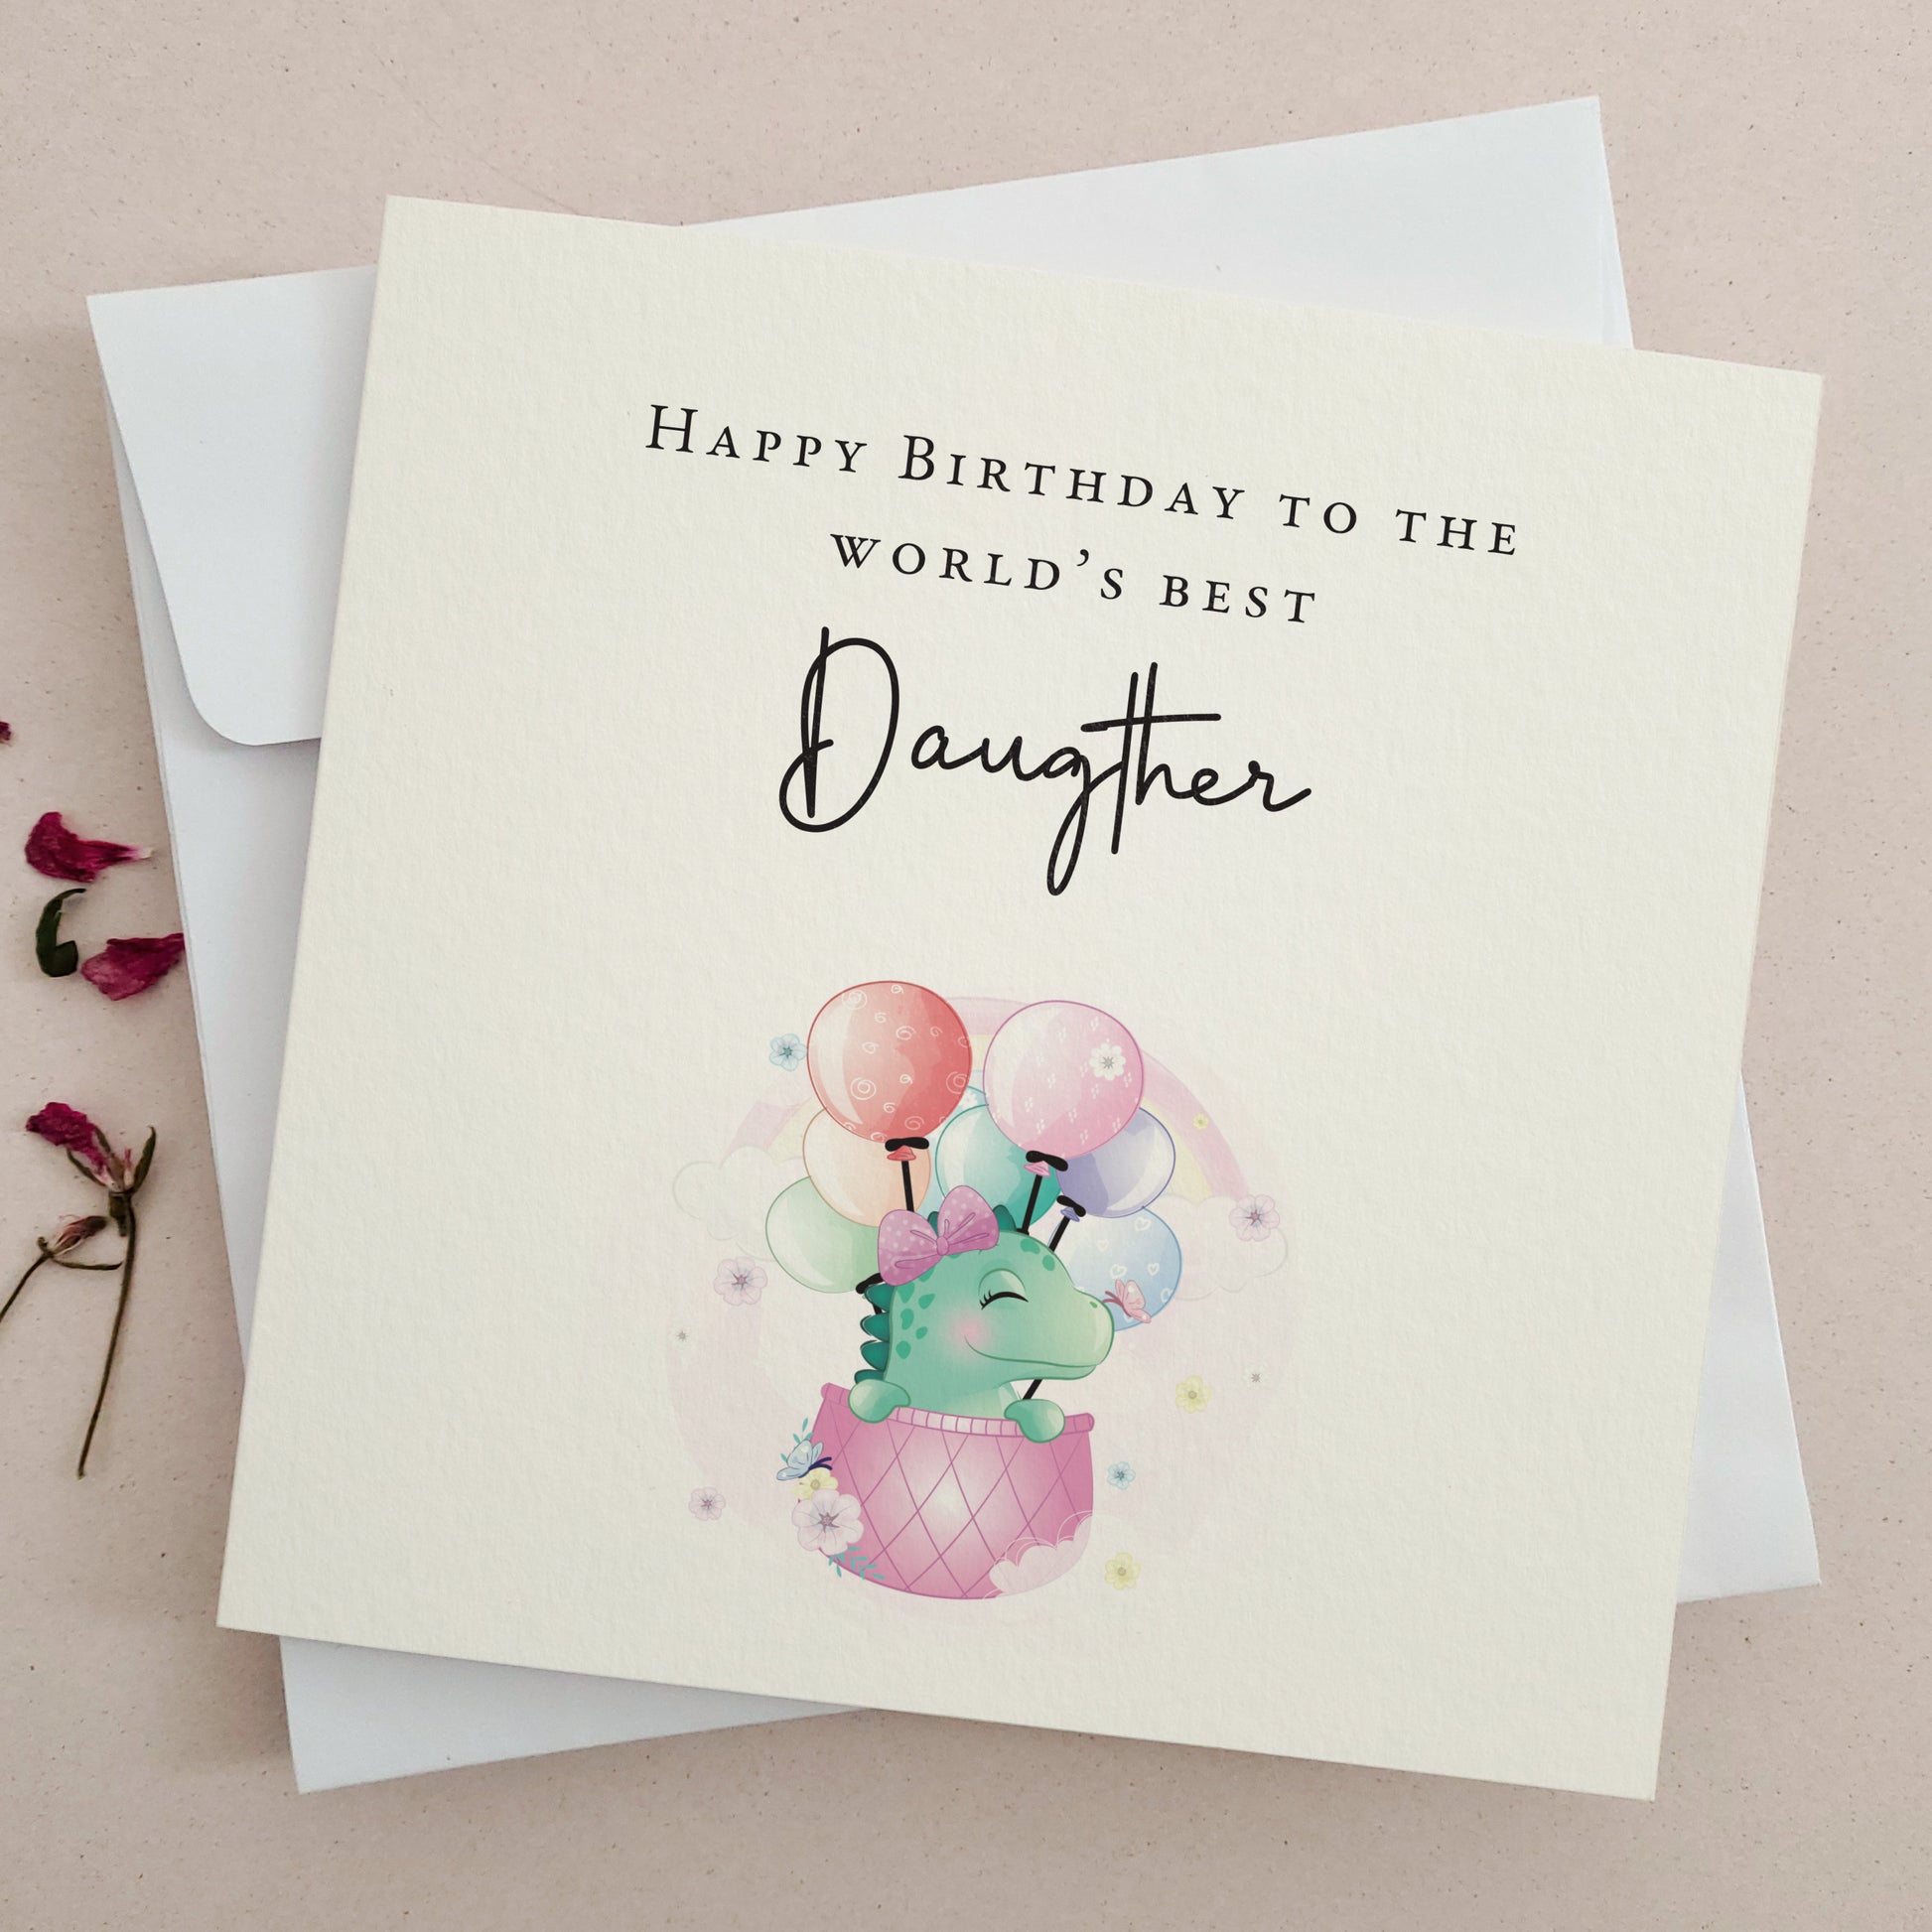 happy birthday to the world's best daughter card - XOXOKristen